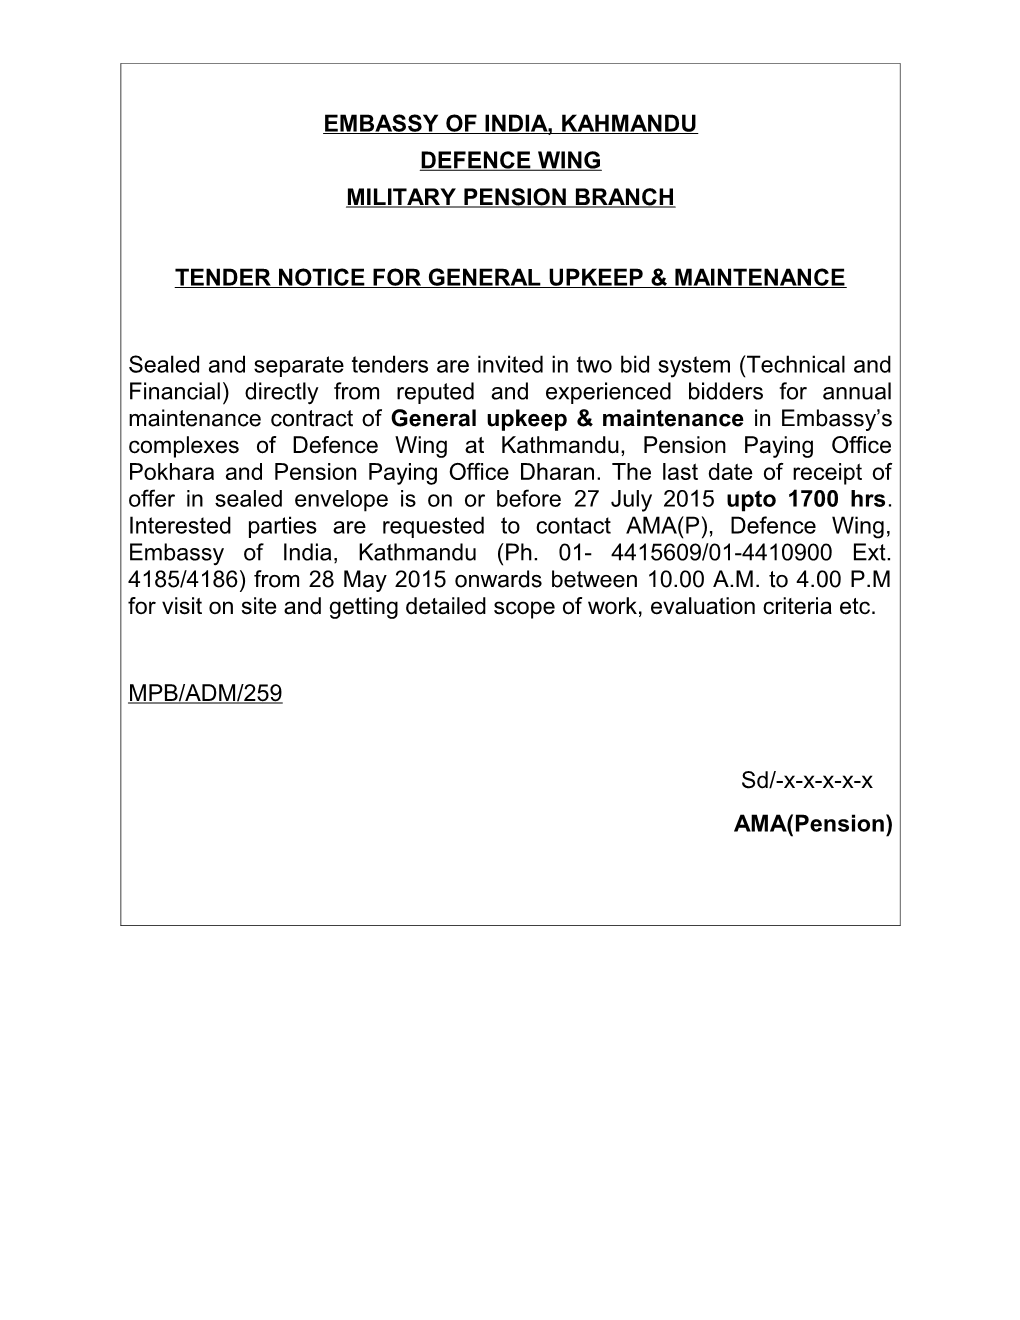 Tender Notice for General Upkeep & Maintenance